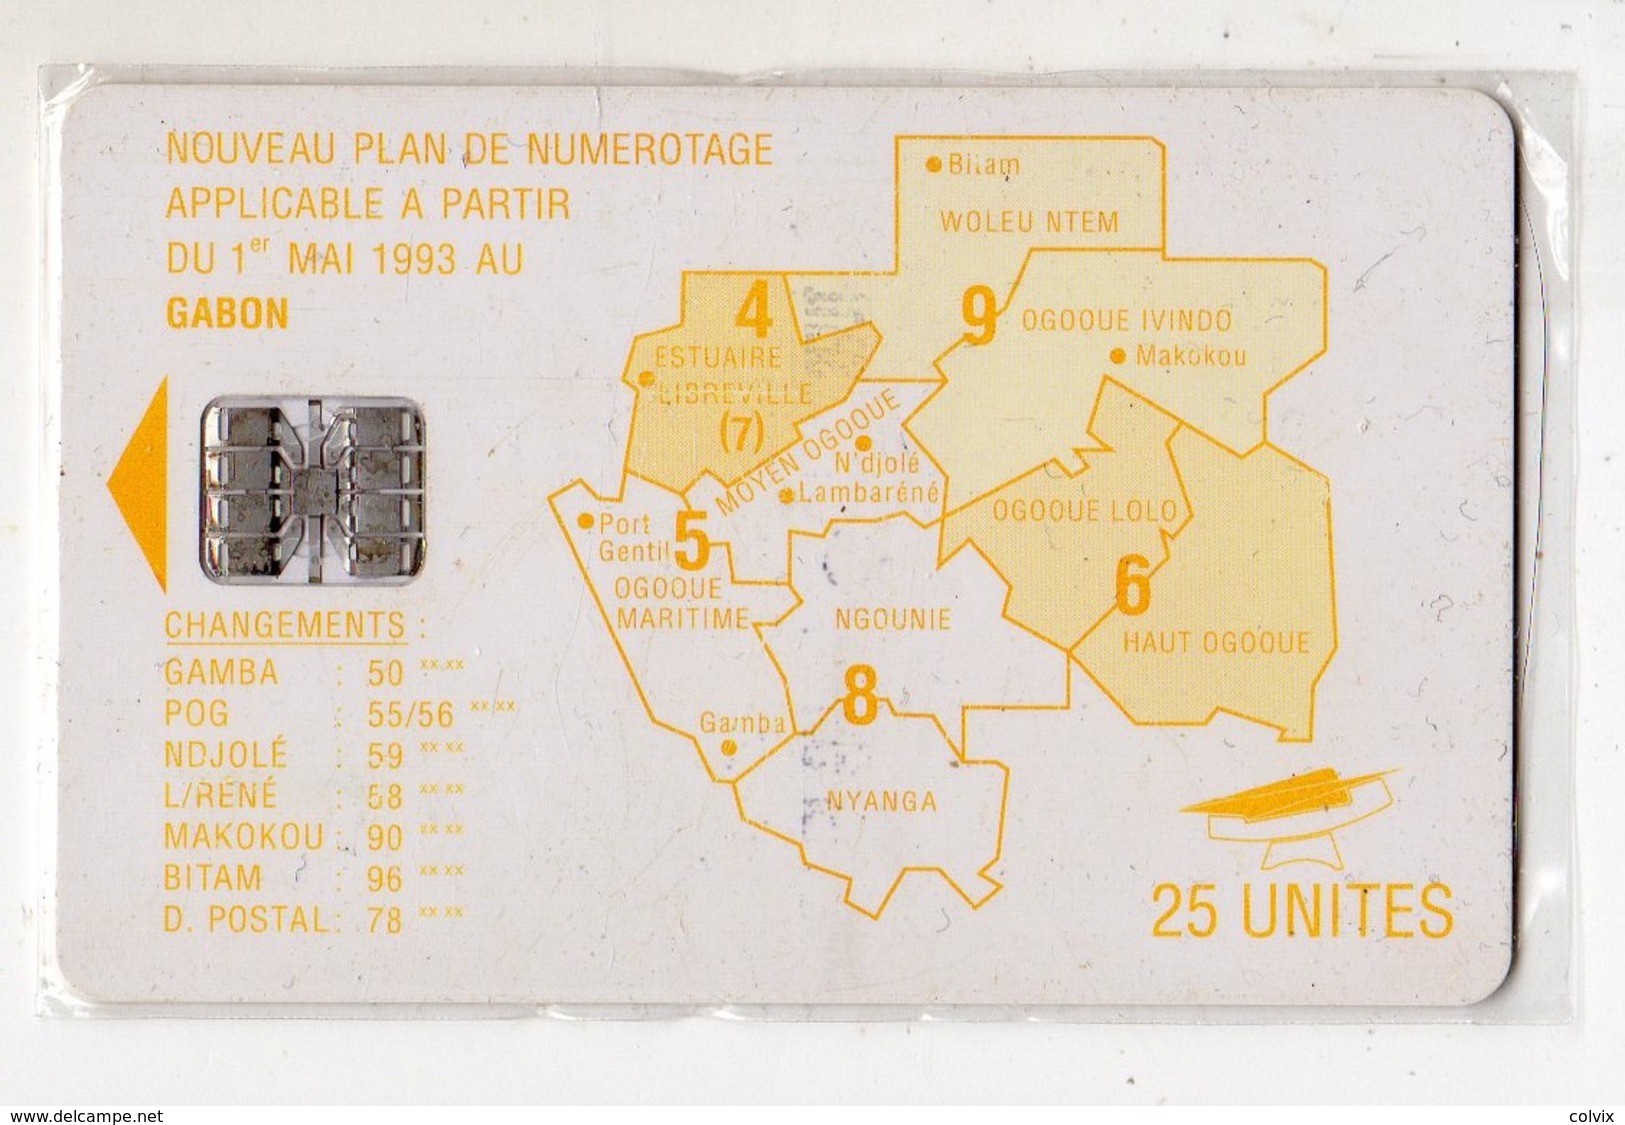 GABON Ref MV Cards : GAB-27 MAP OF GABON 25 U - Gabon